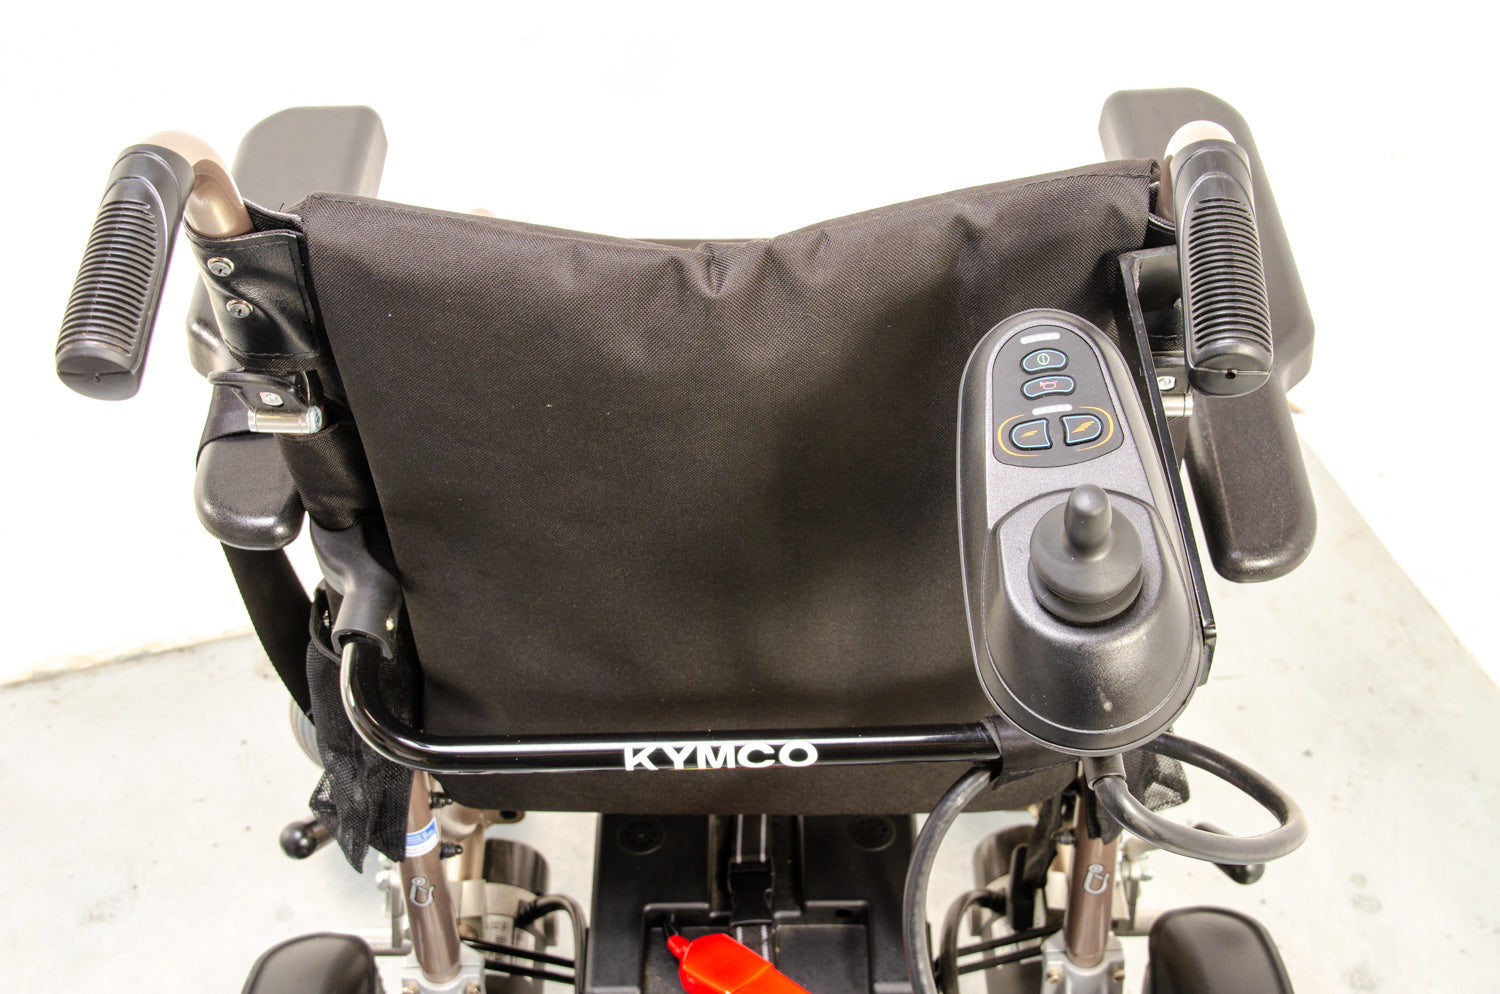 Kymco Vivio Electric Wheelchair Powerchair Used Transportable Folding Lightweight 03678